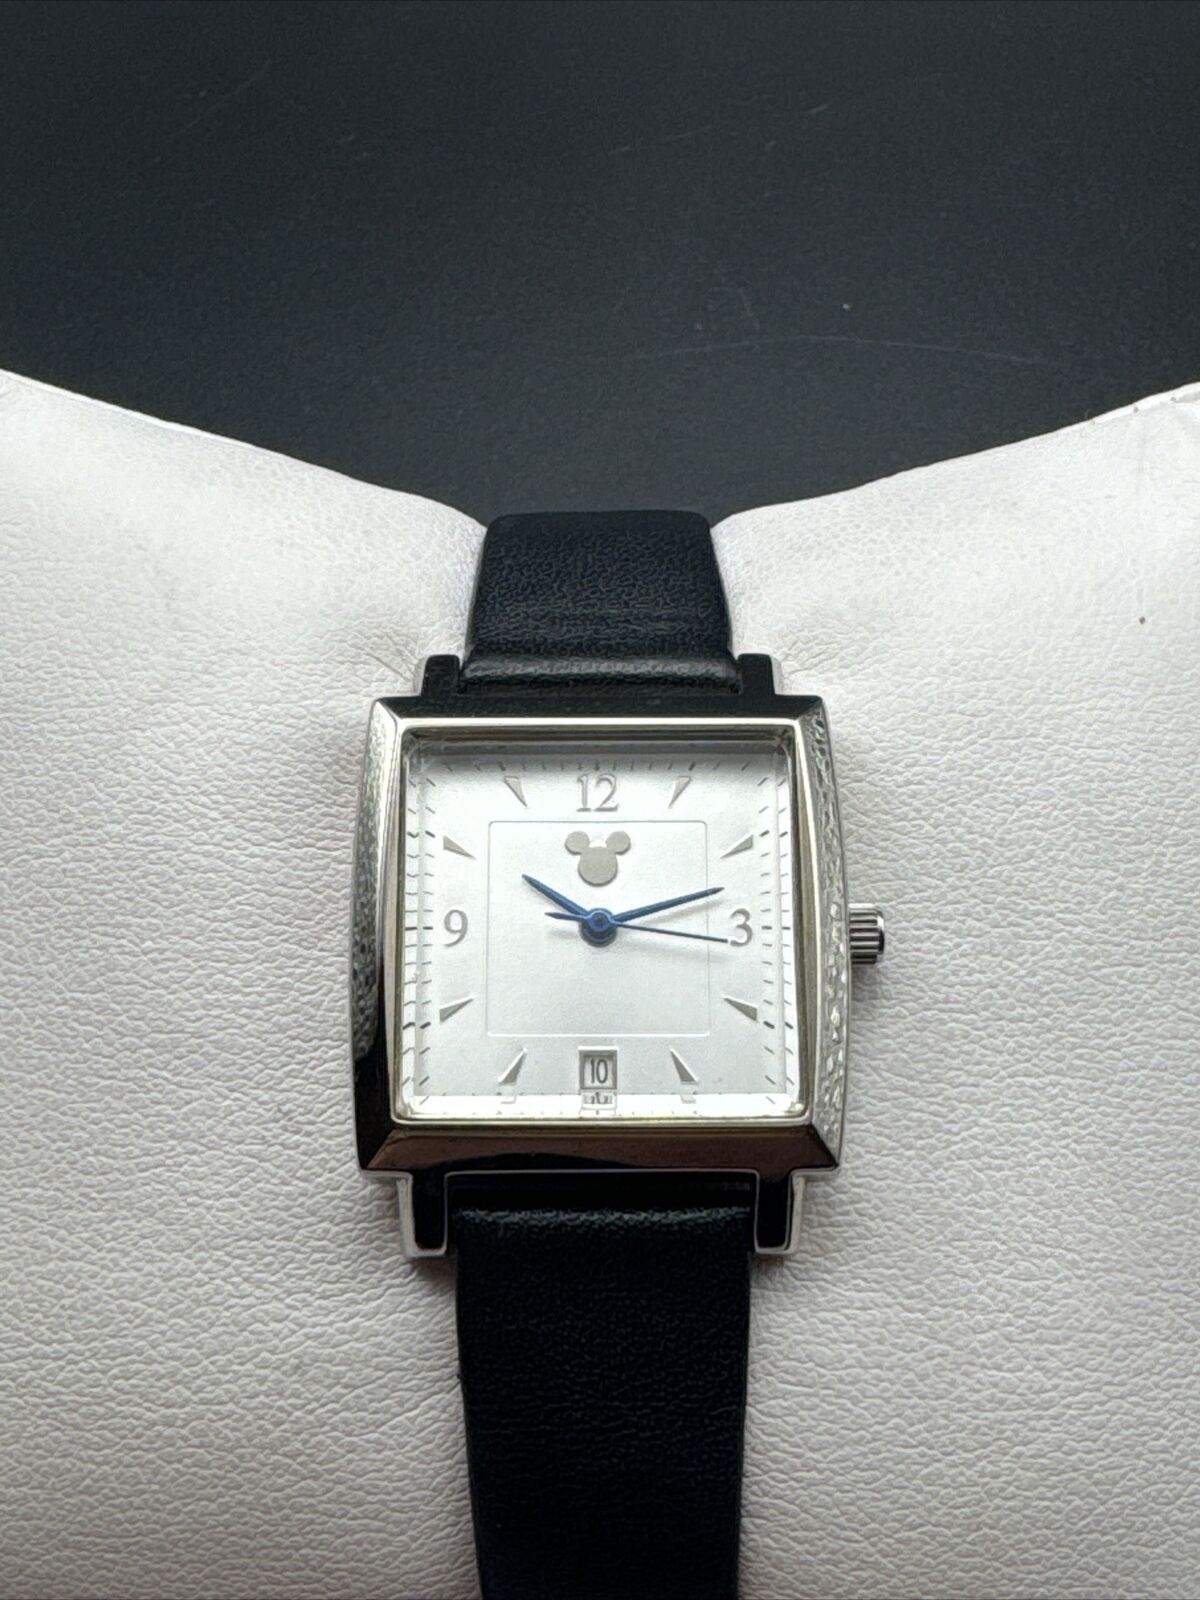 Genuine Disney Timeworks Silver Tone Square Face Blue Analog Hands Wrist Watch 